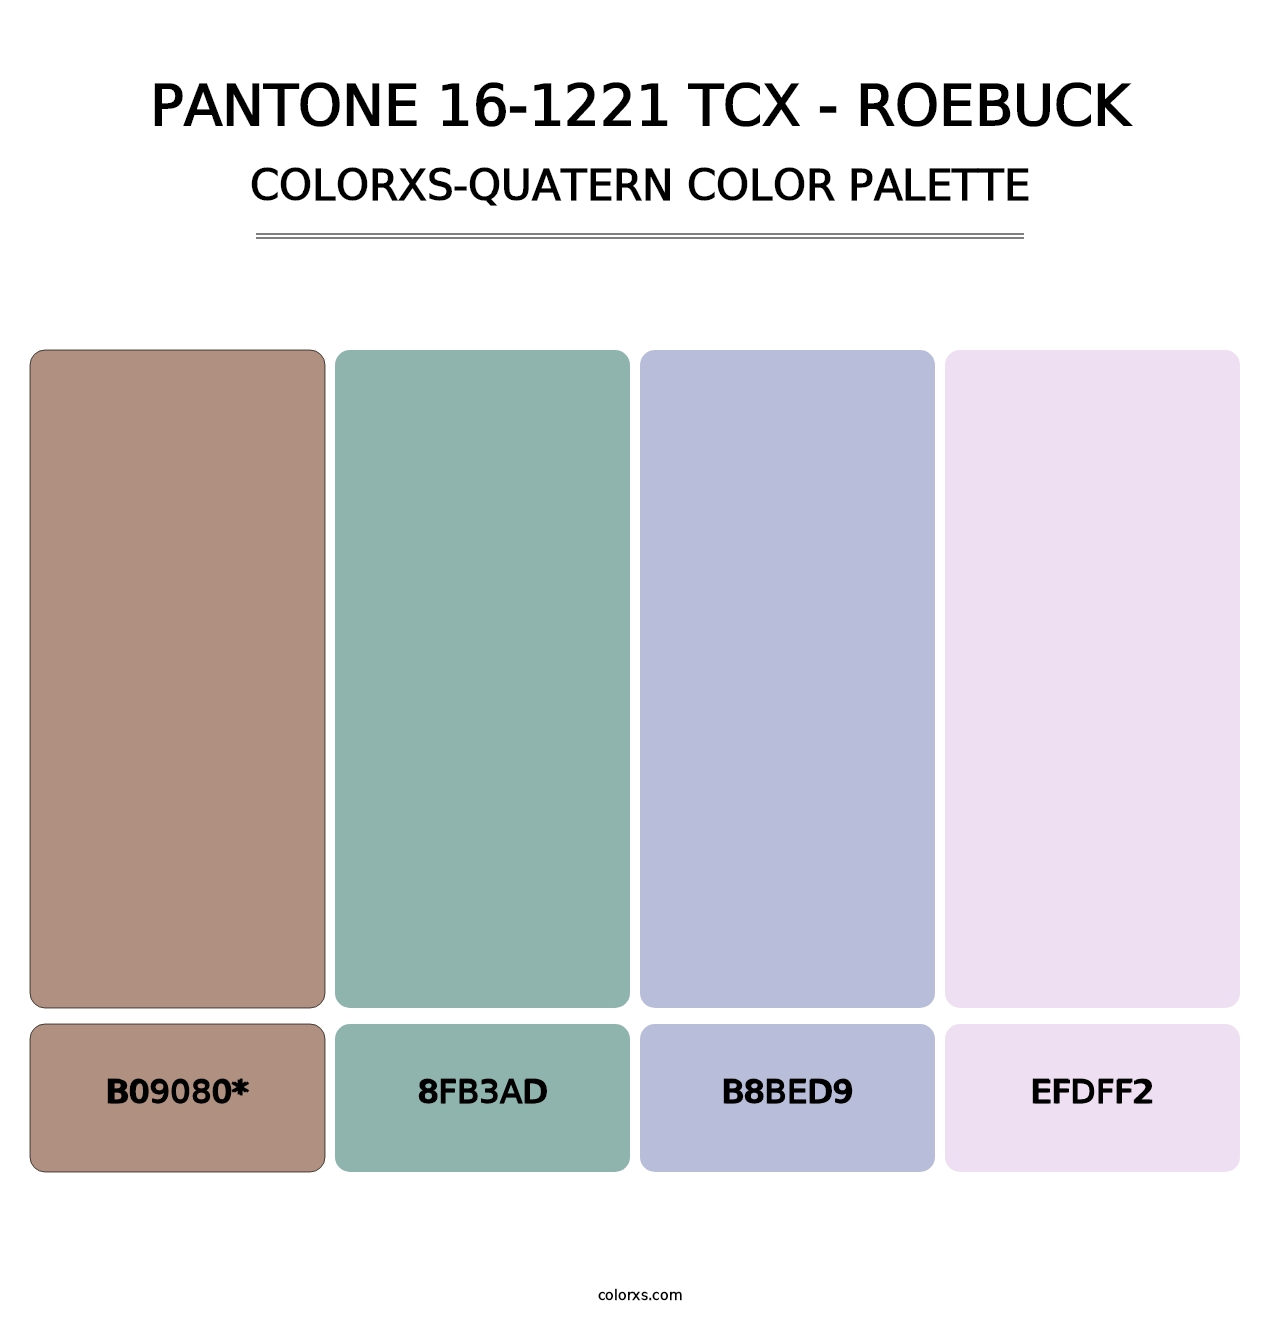 PANTONE 16-1221 TCX - Roebuck - Colorxs Quatern Palette